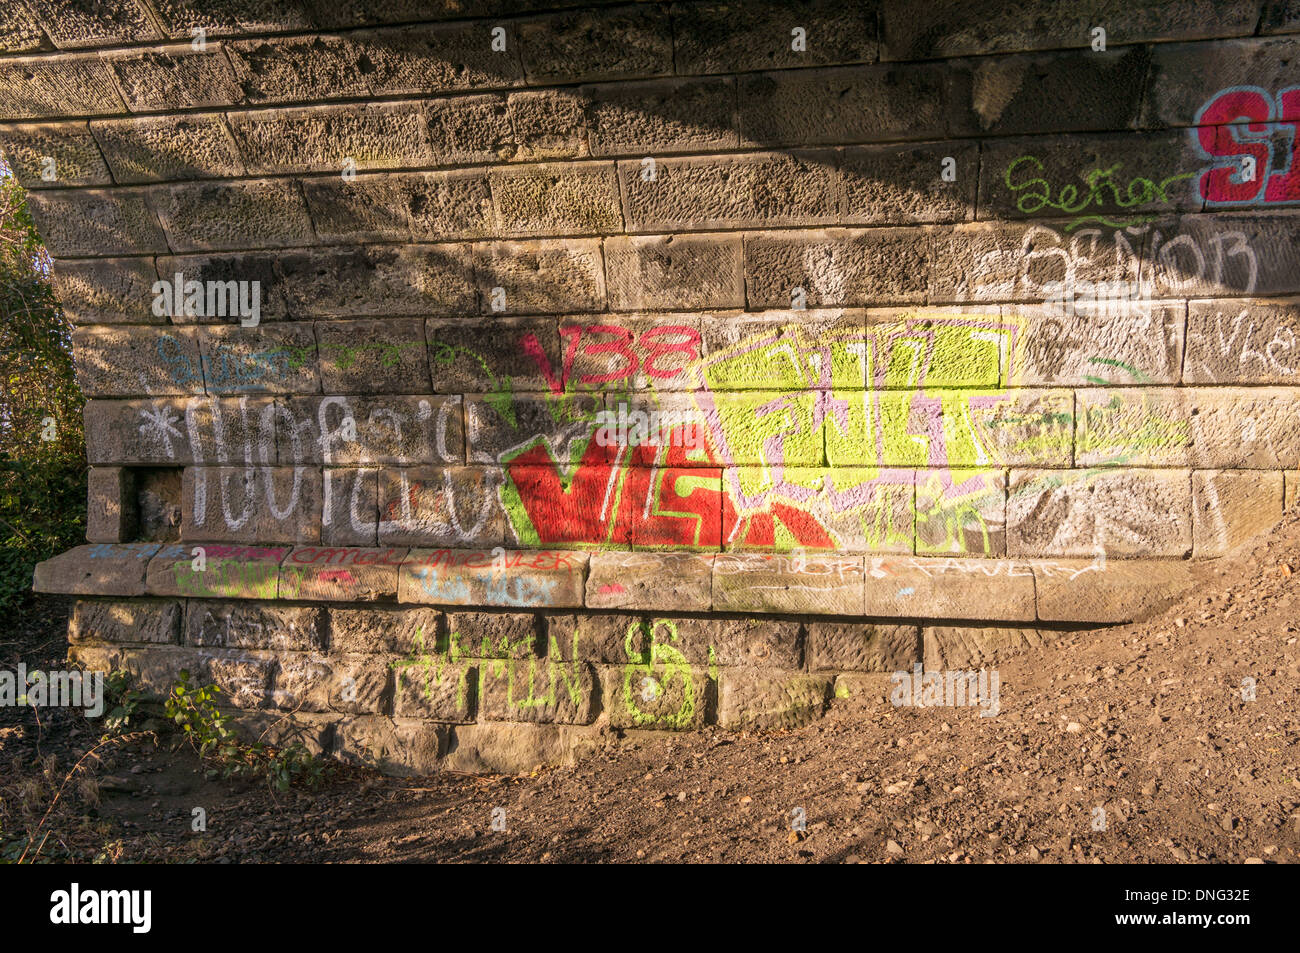 Graffiti within an arch of the Victoria viaduct or railway bridge Washington, north east England UK Stock Photo